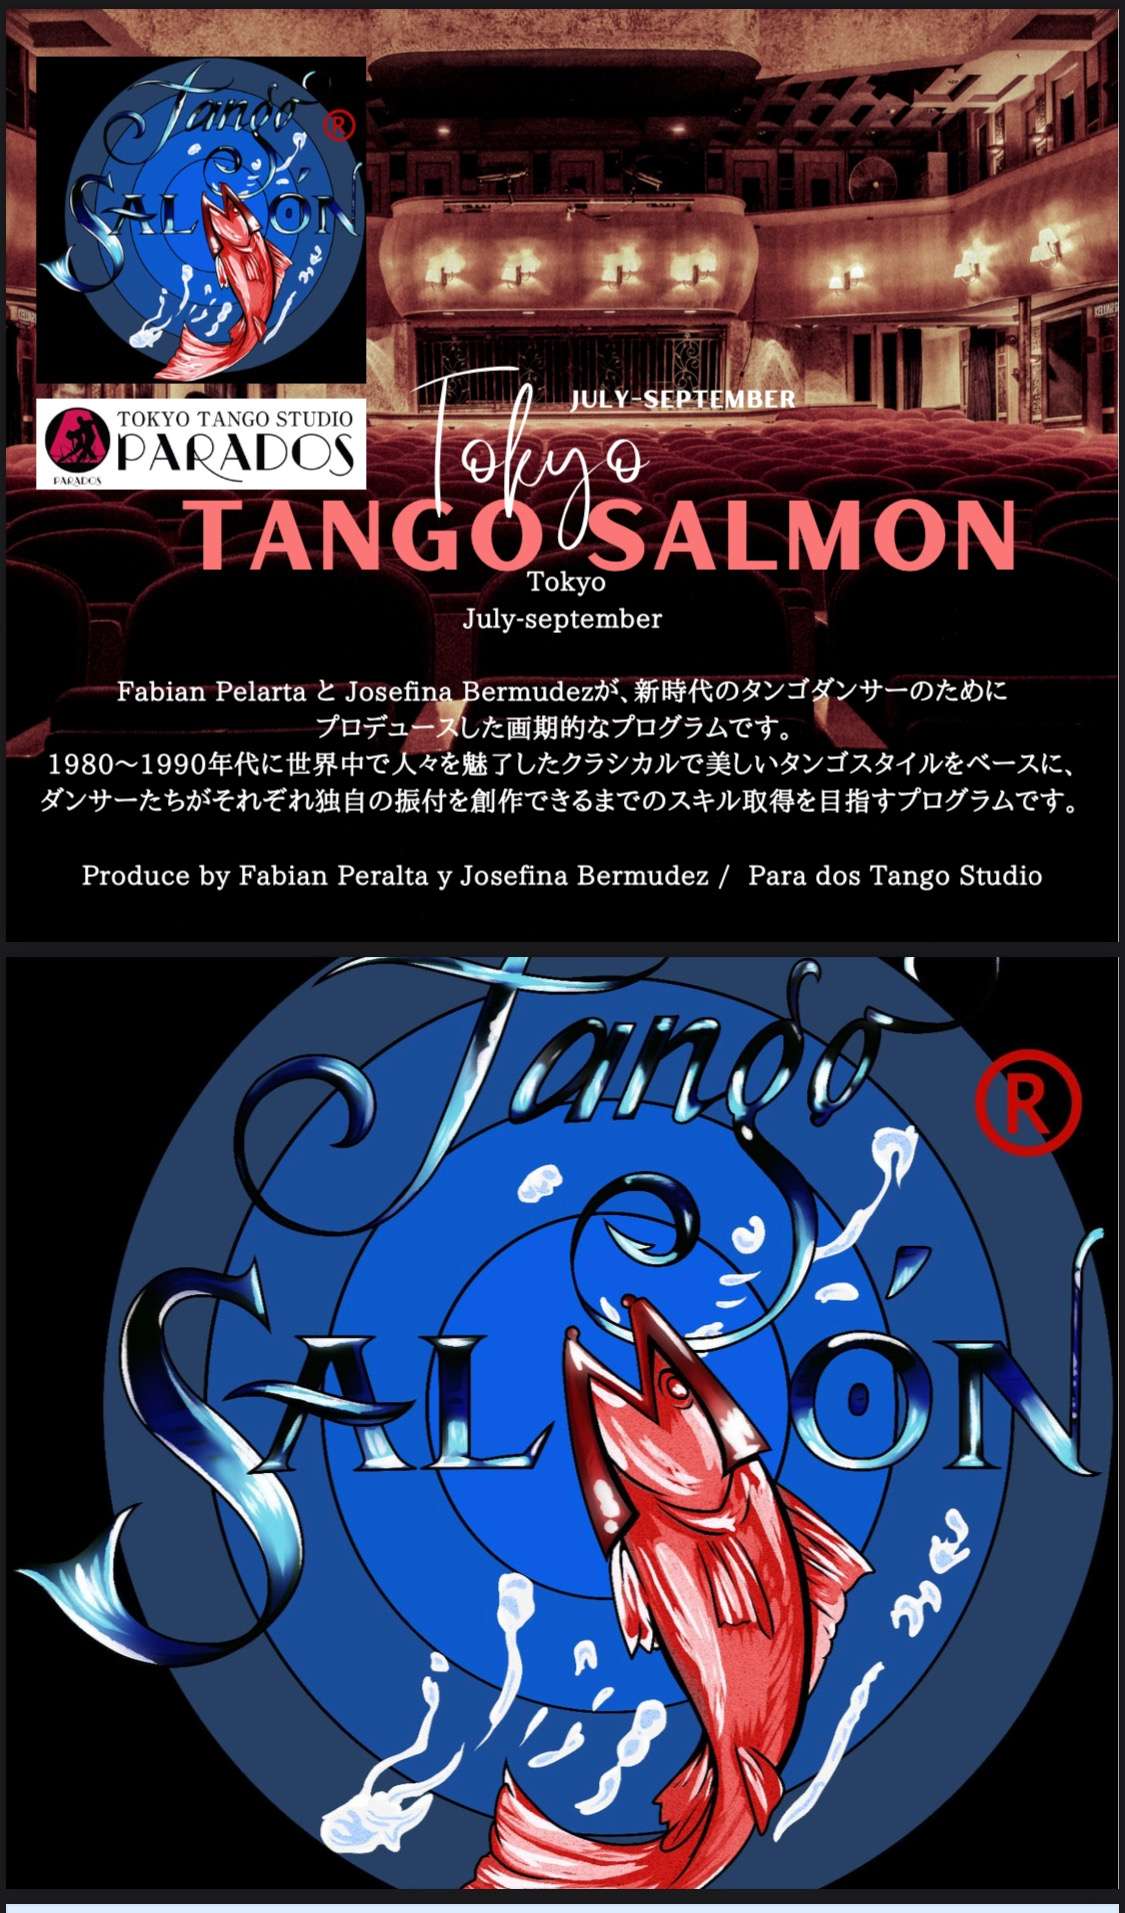 ✨🇦🇷New program tango salmon🇦🇷✨